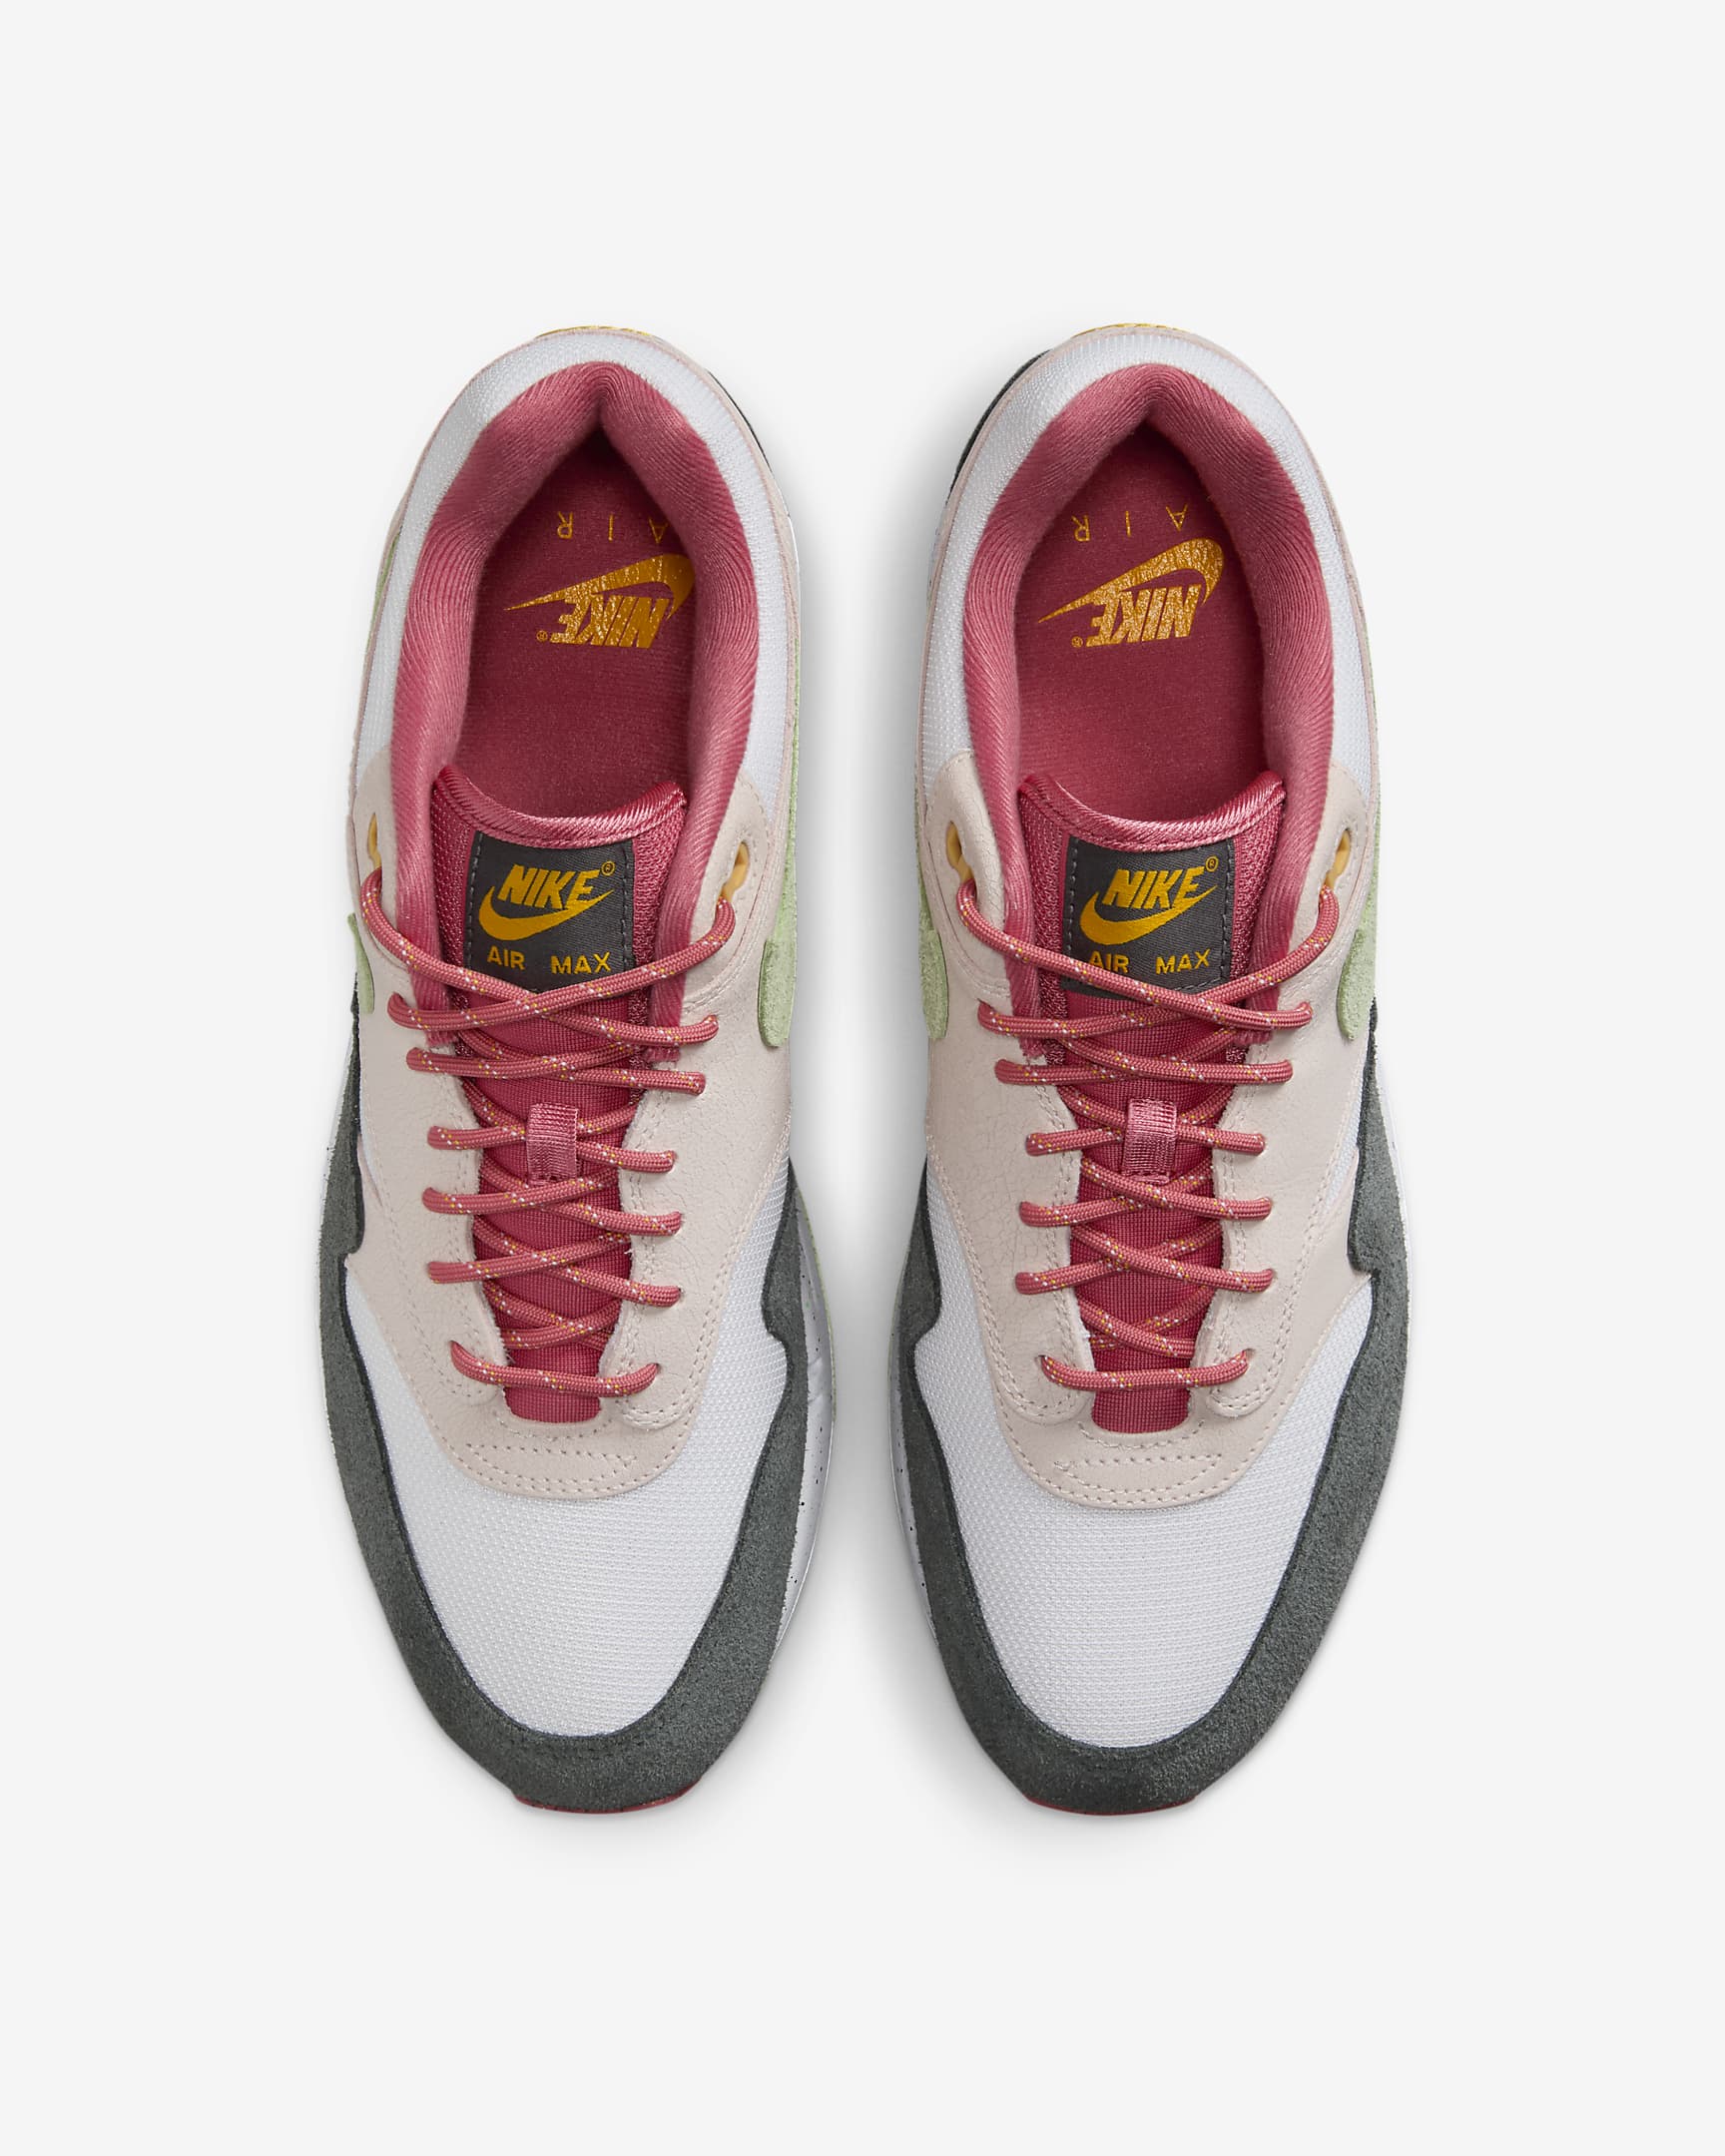 Nike Air Max 1 Men's Shoes - Light Soft Pink/Anthracite/Adobe/Vapor Green